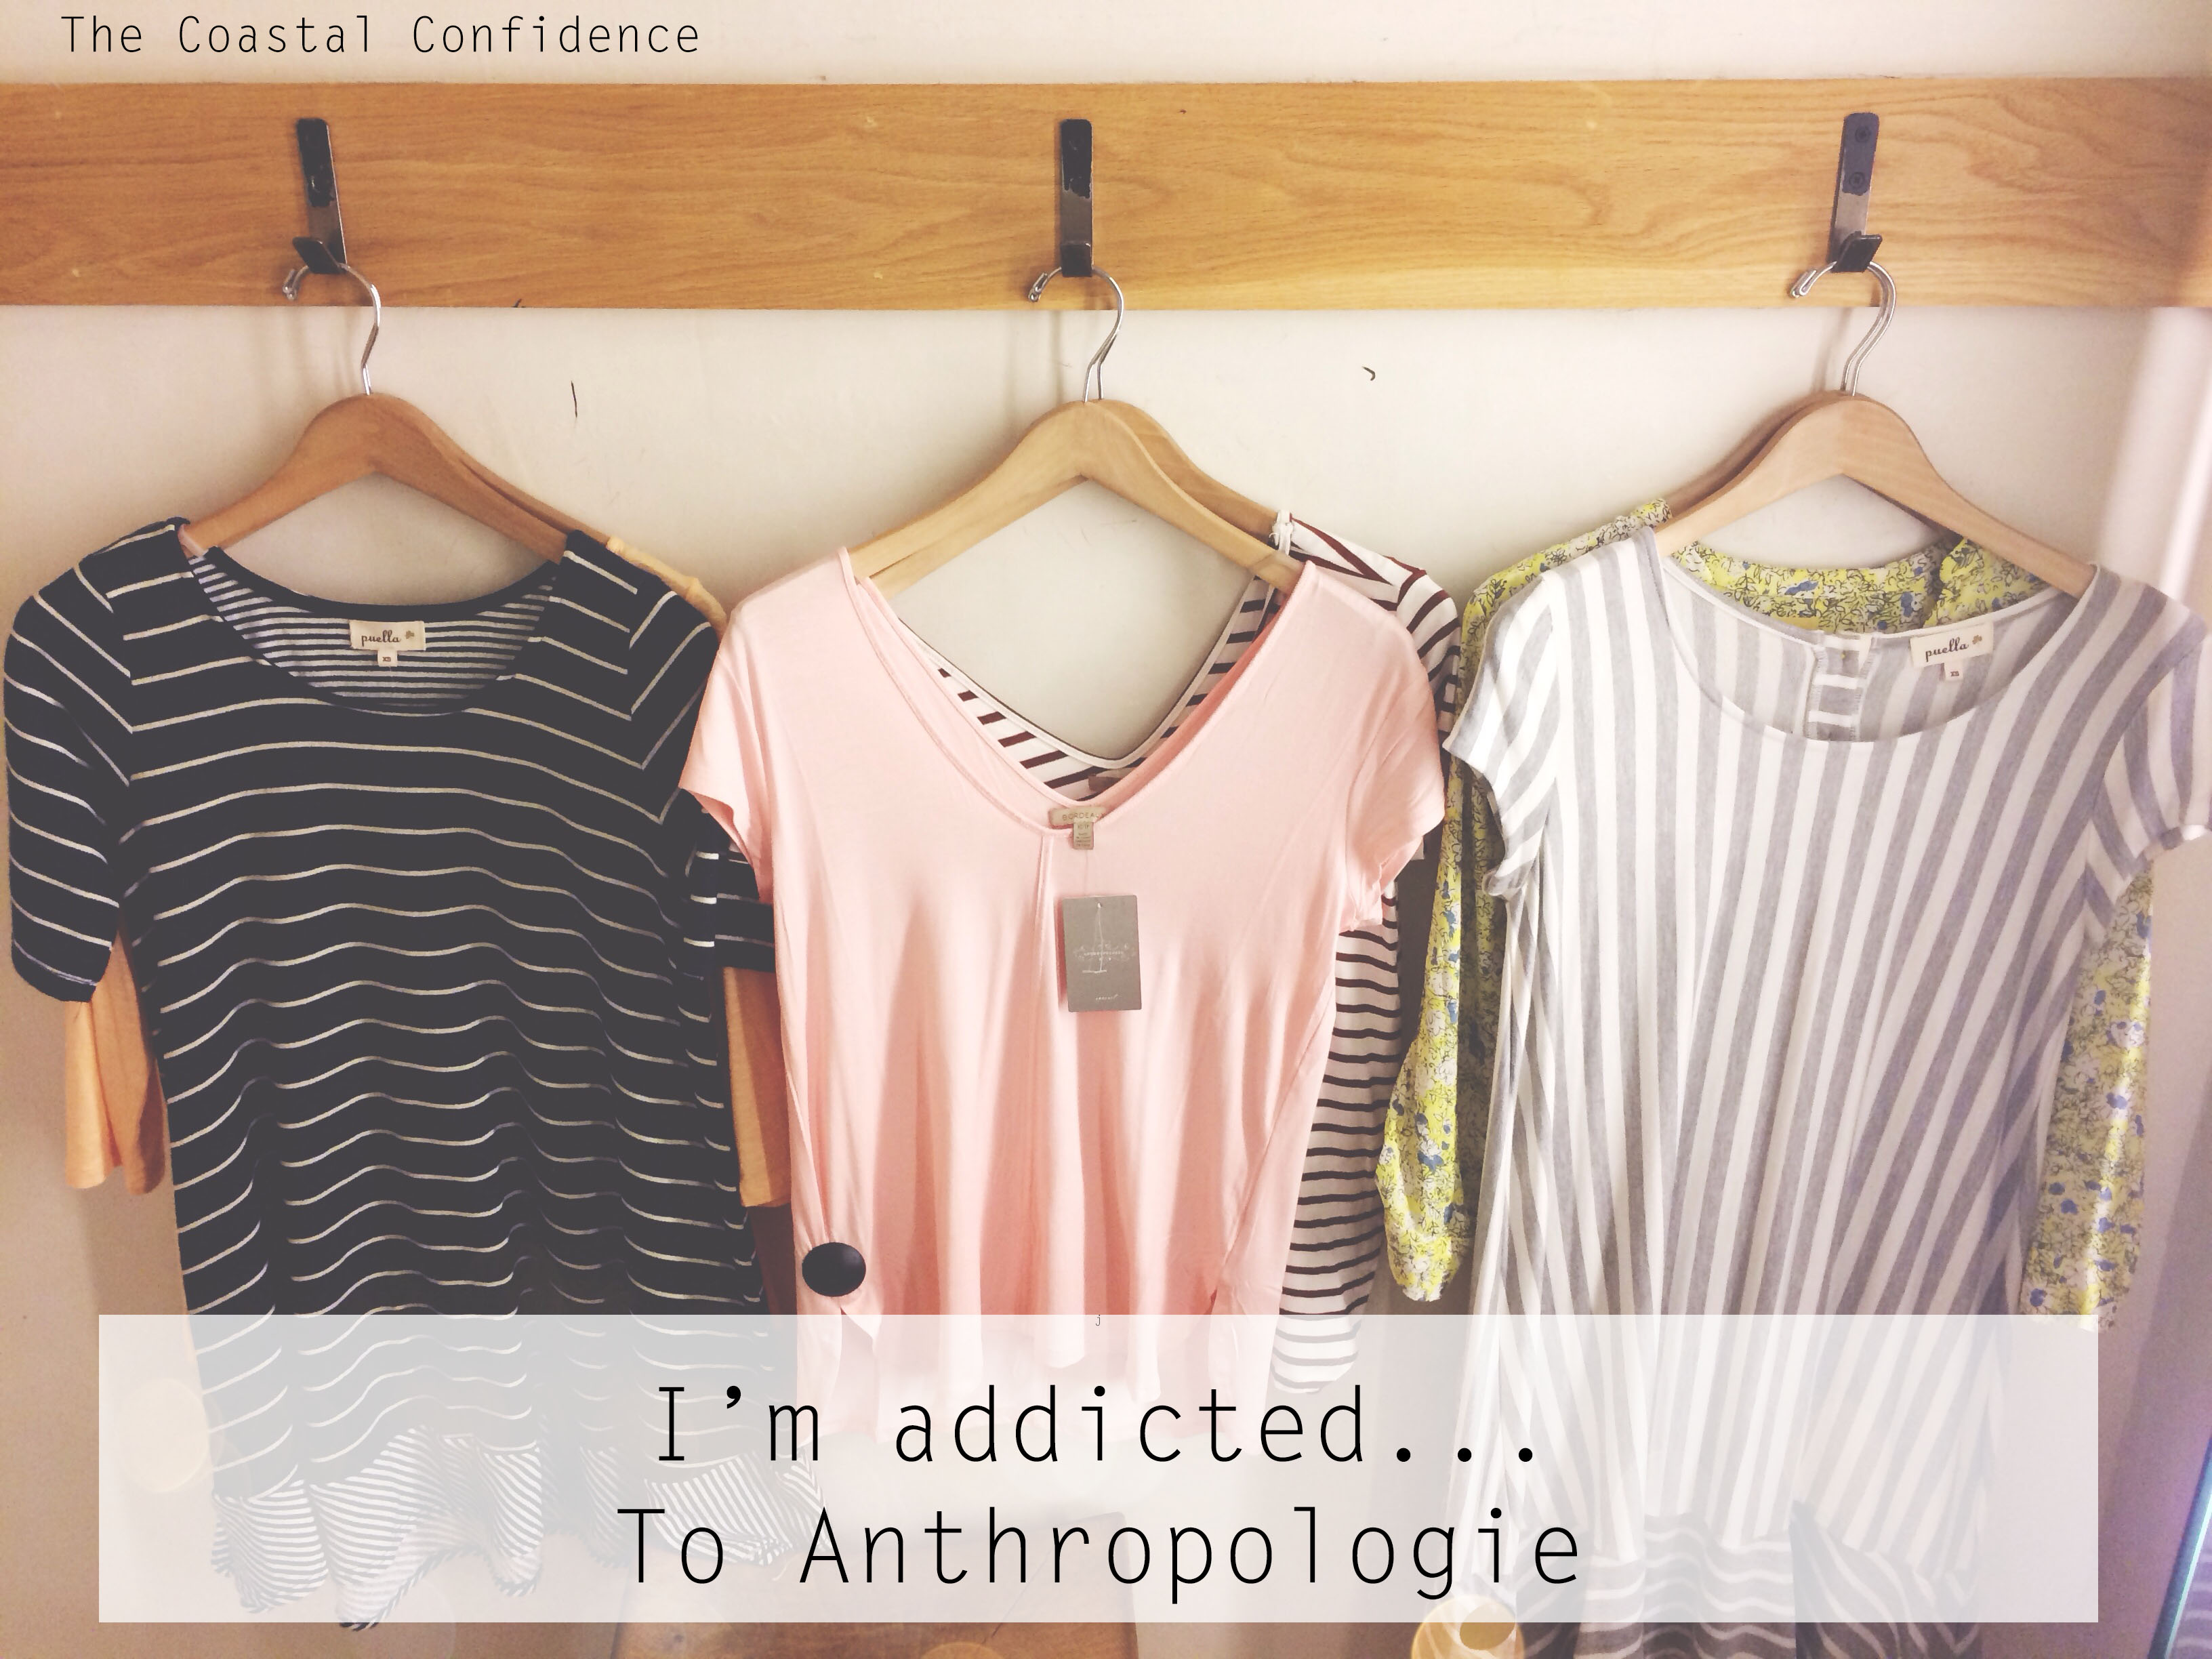 My Anthropologie addiction